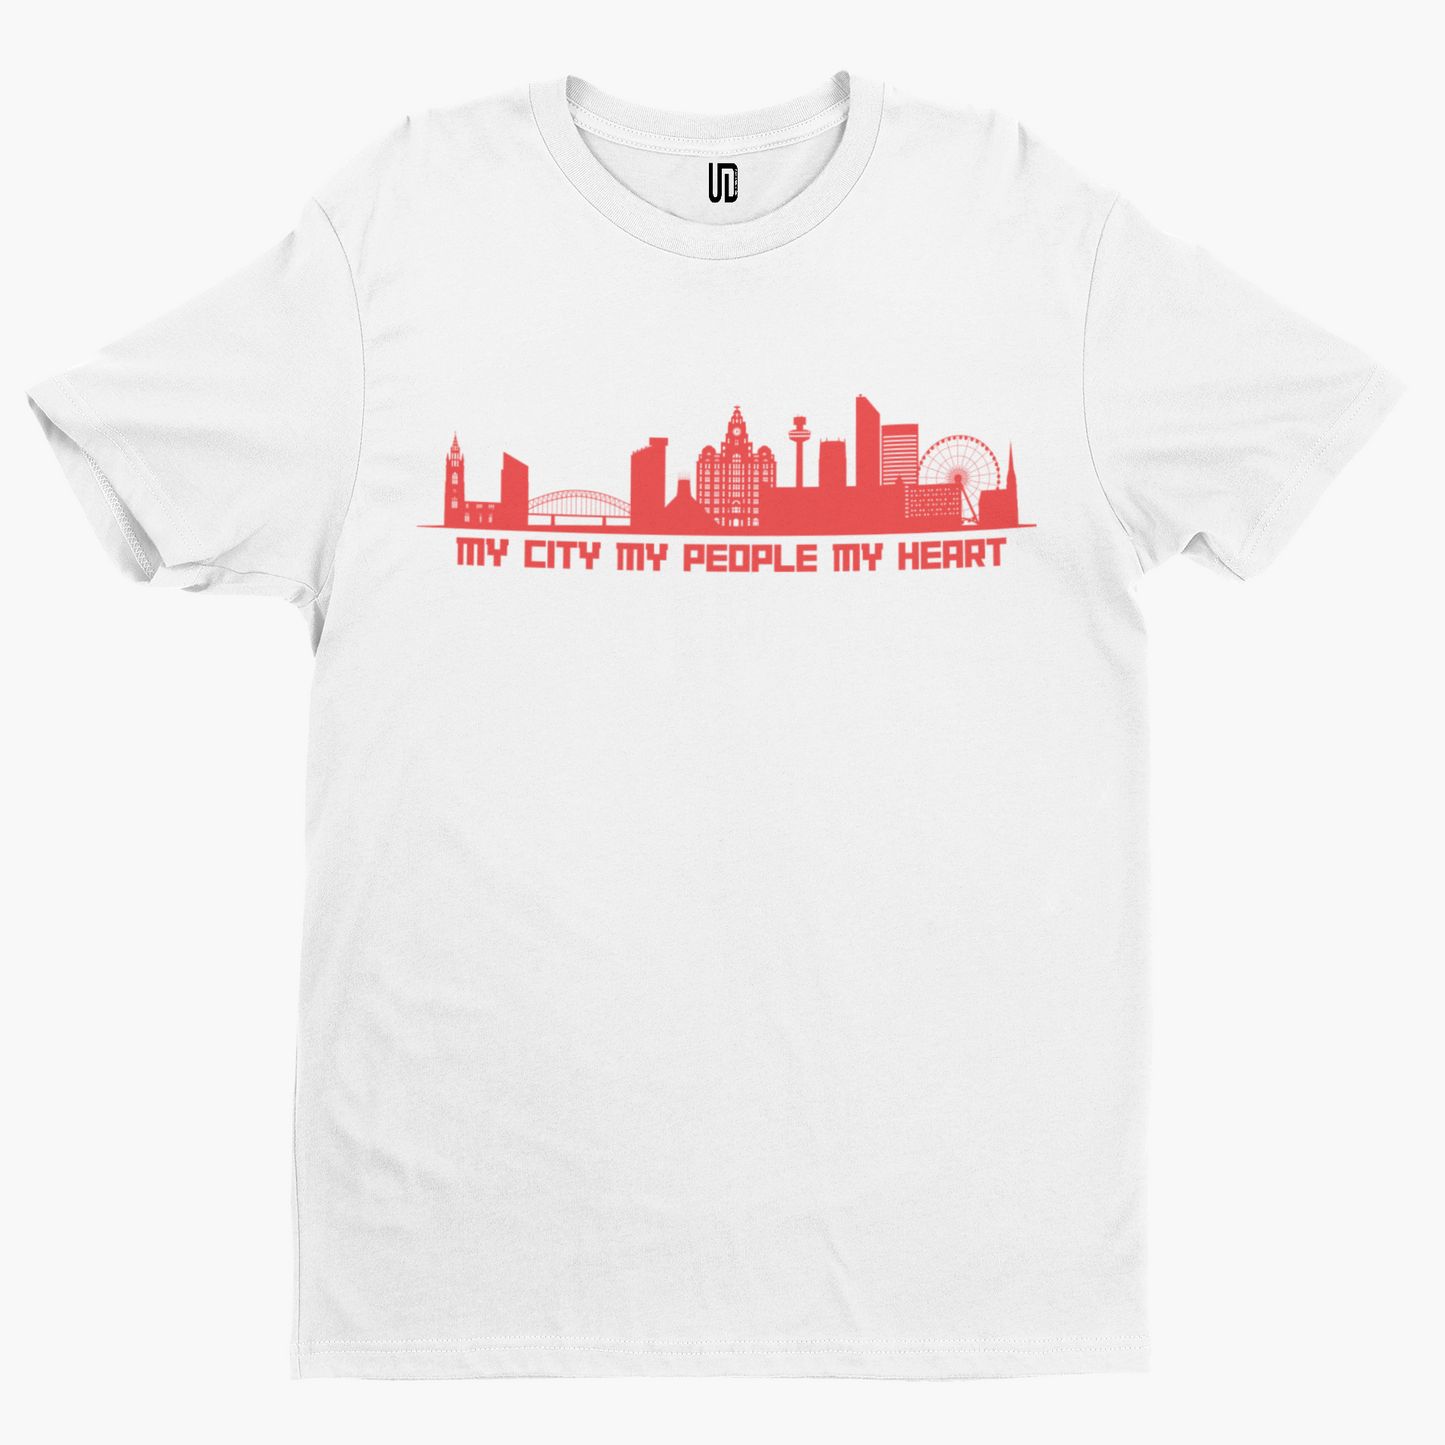 My City My People T-Shirt - Unique Designs UK Scouse Meme Collection Liverpool